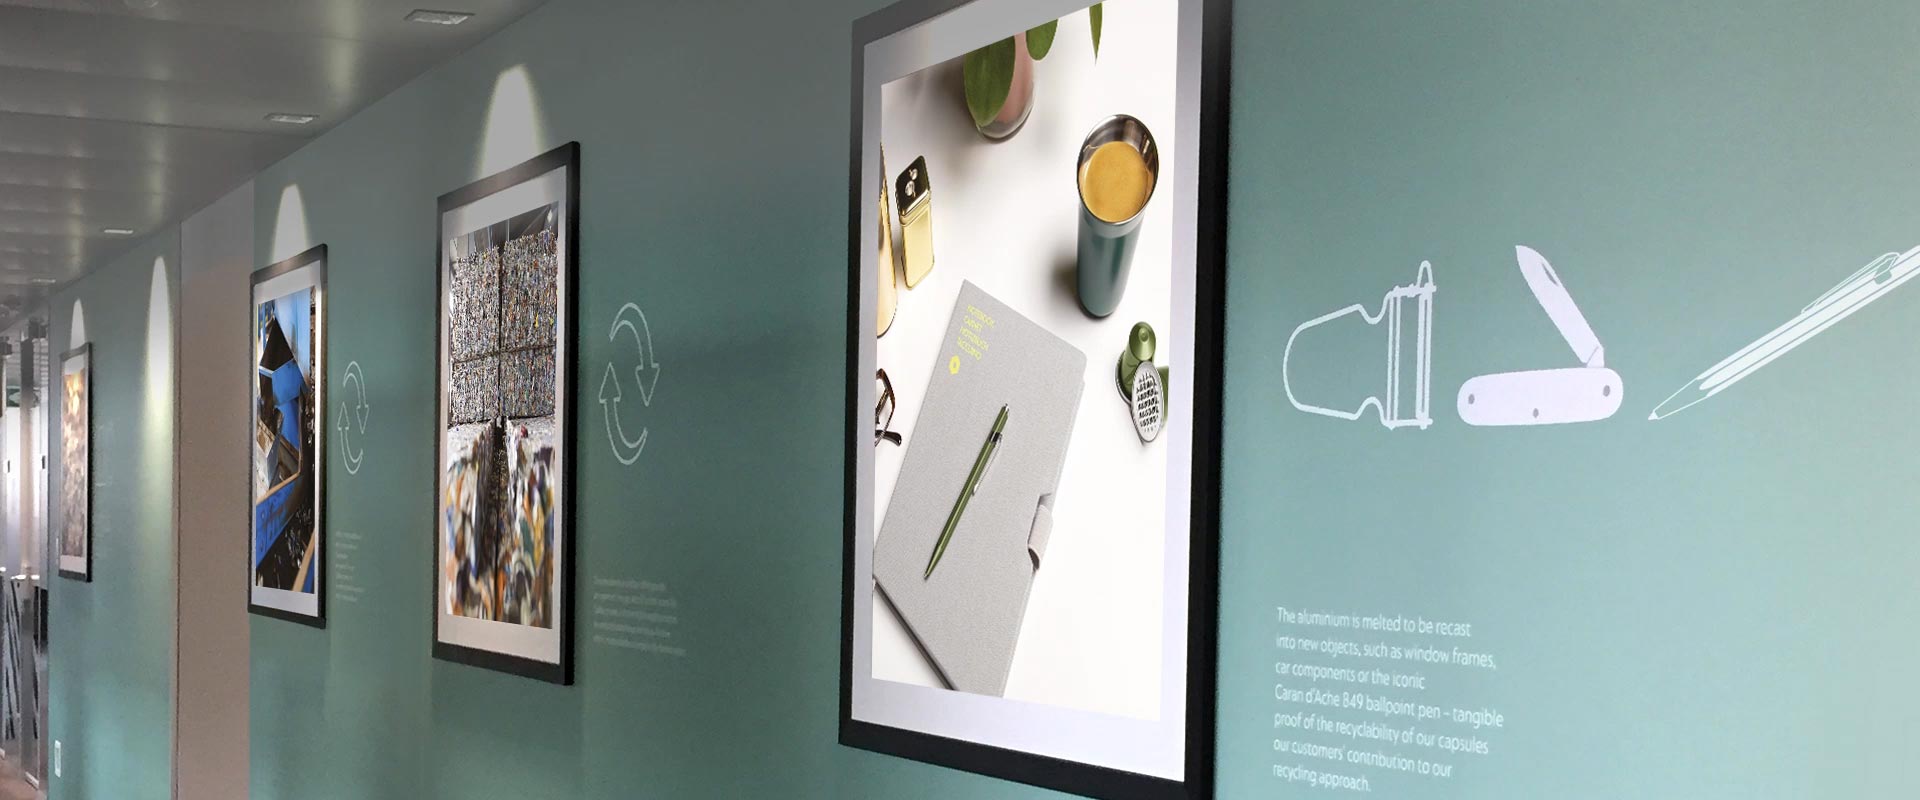 Brand storytelling for Nespresso offices re-design